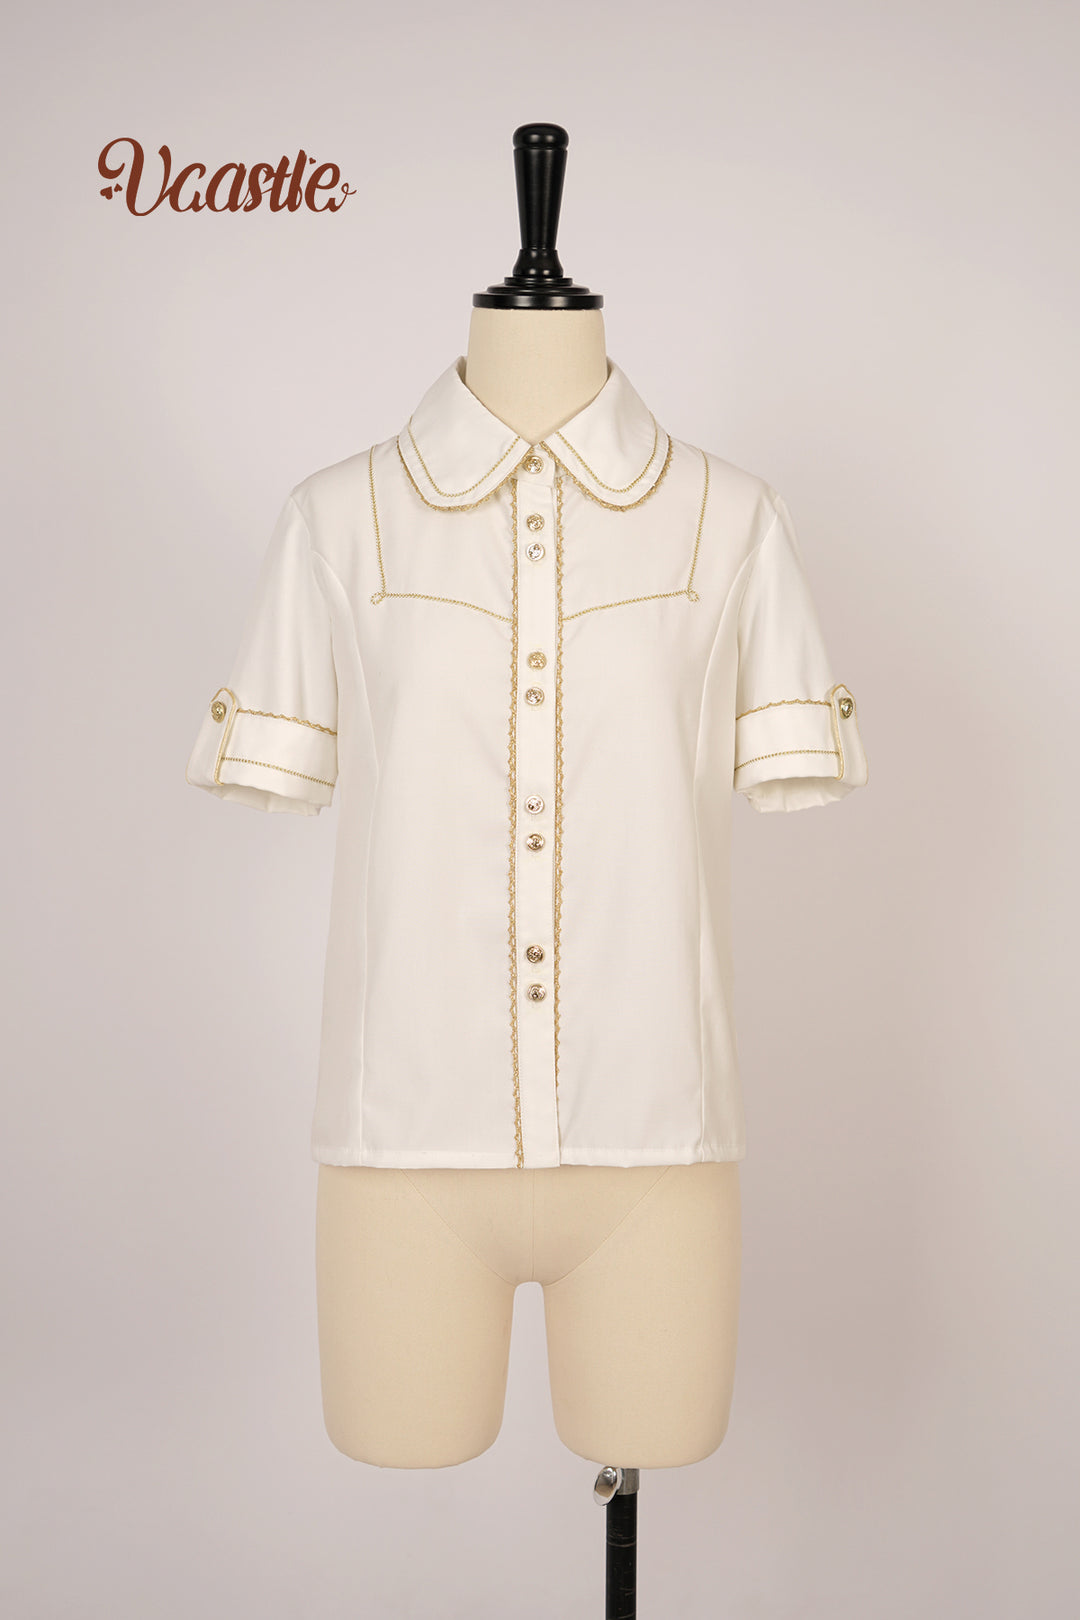 Vcastle~Mocha Choc~Kawaii Lolita Slopette Dress Suit Multicolors S white short sleeve shirt 